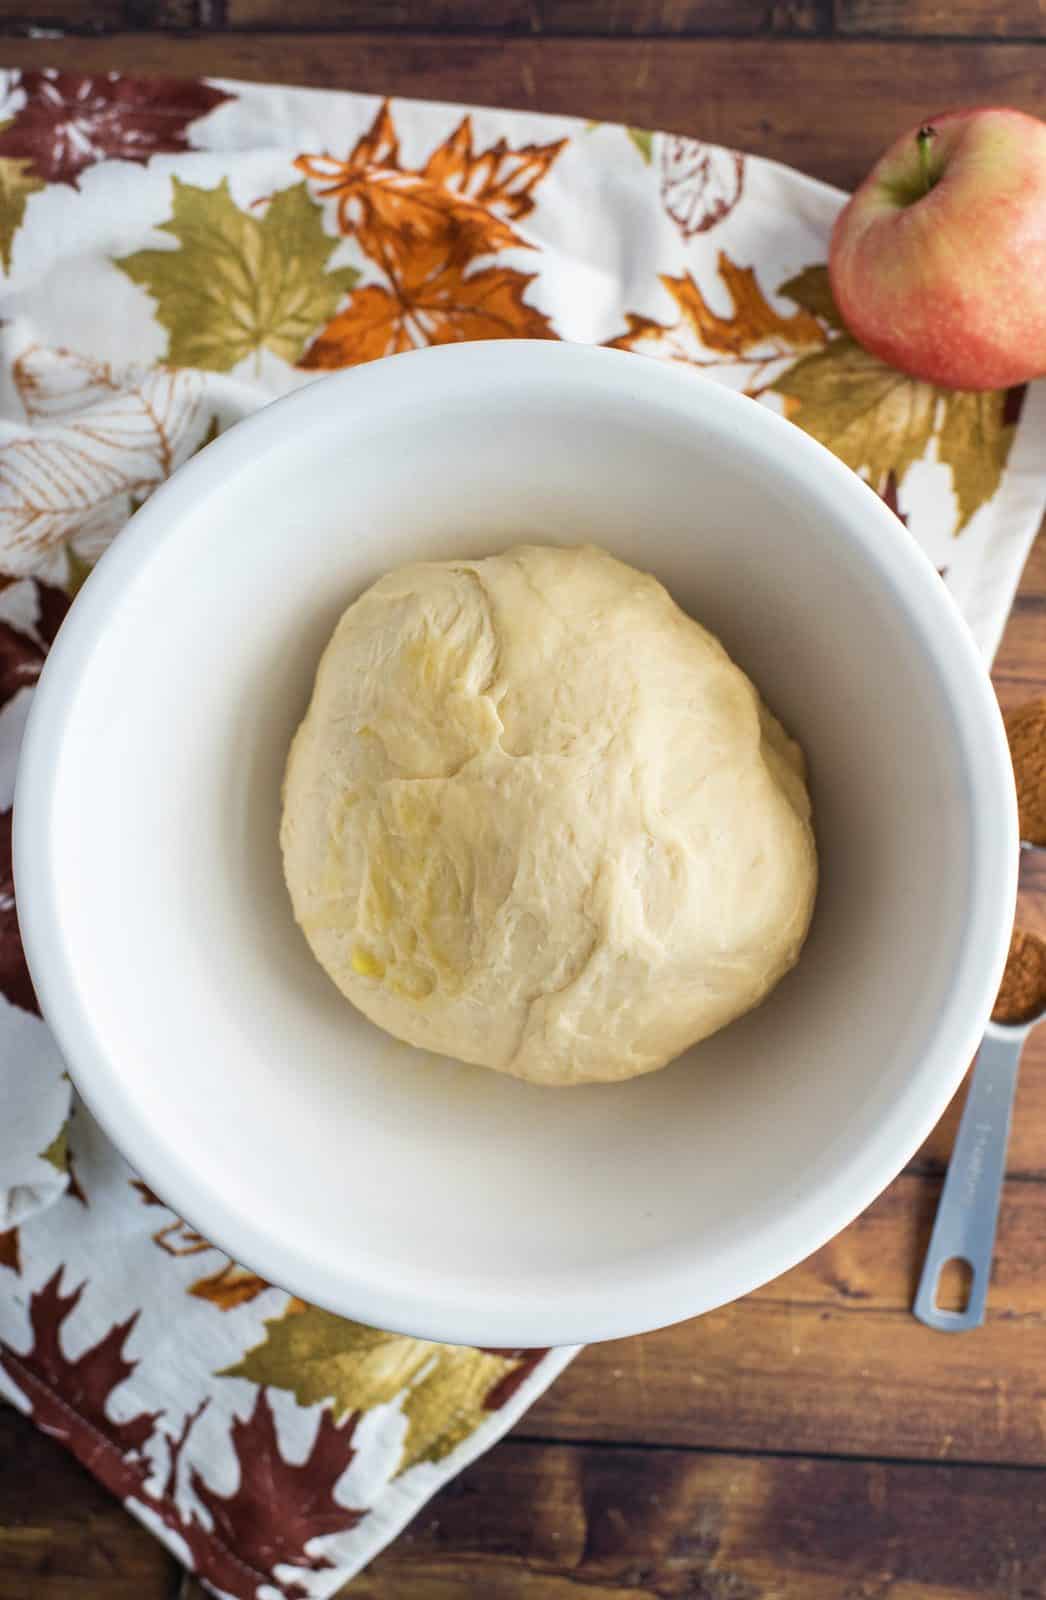 Dough ball in bowl before rising.